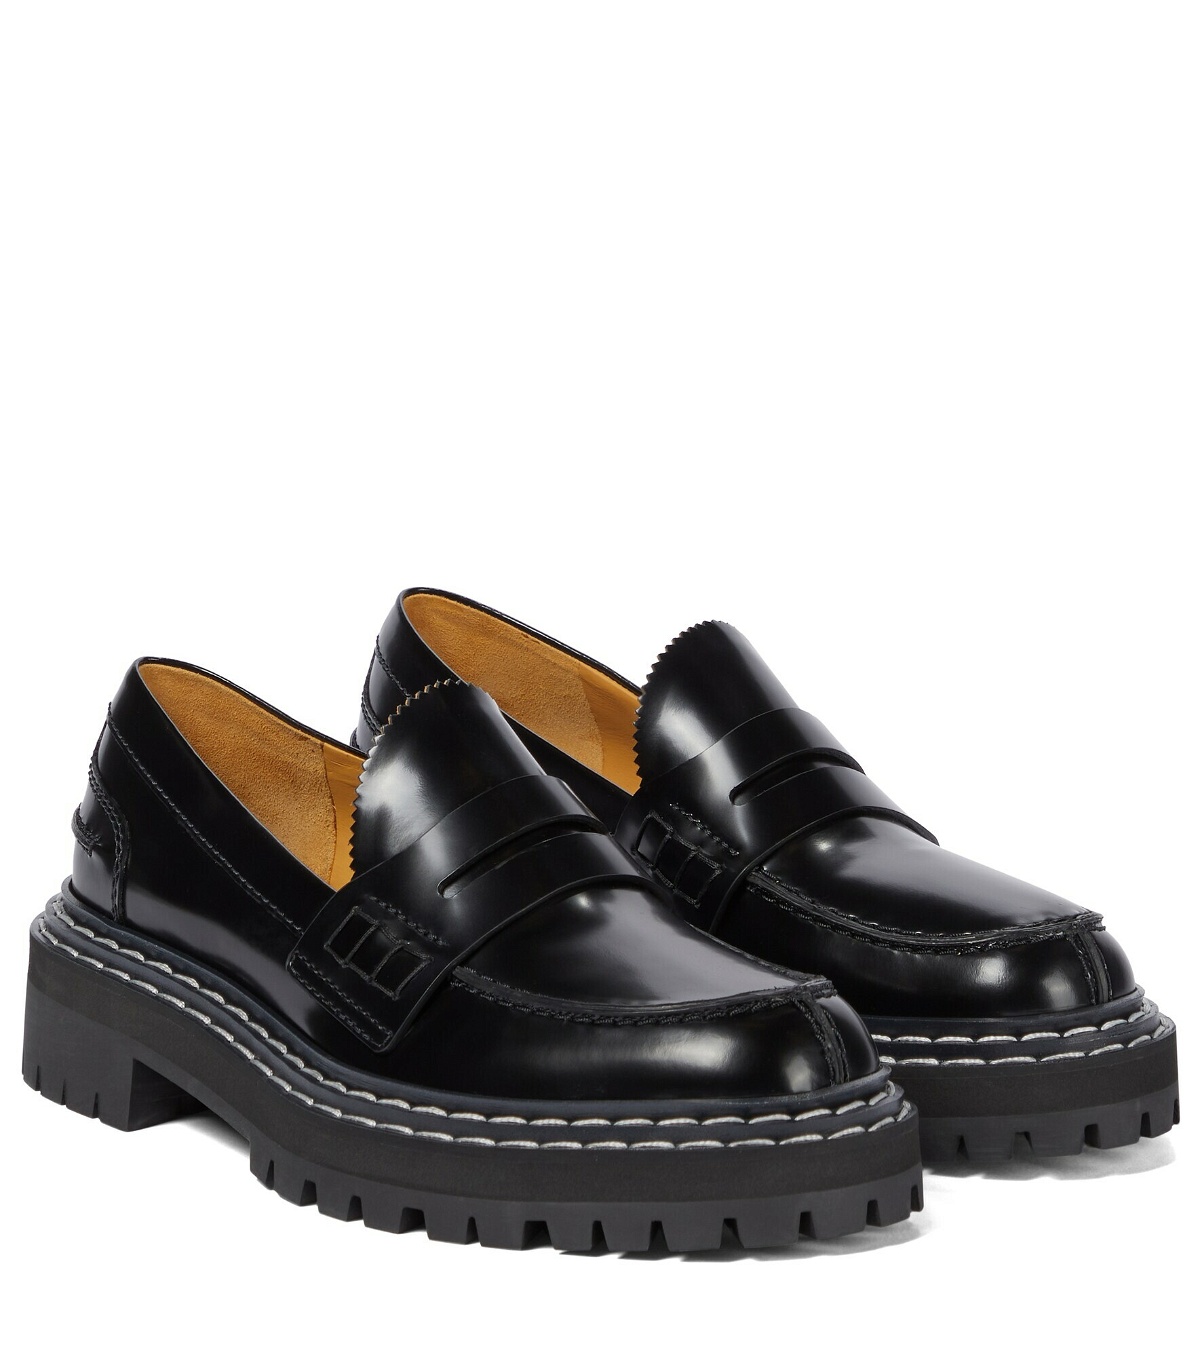 Proenza Schouler - Leather loafers Proenza Schouler